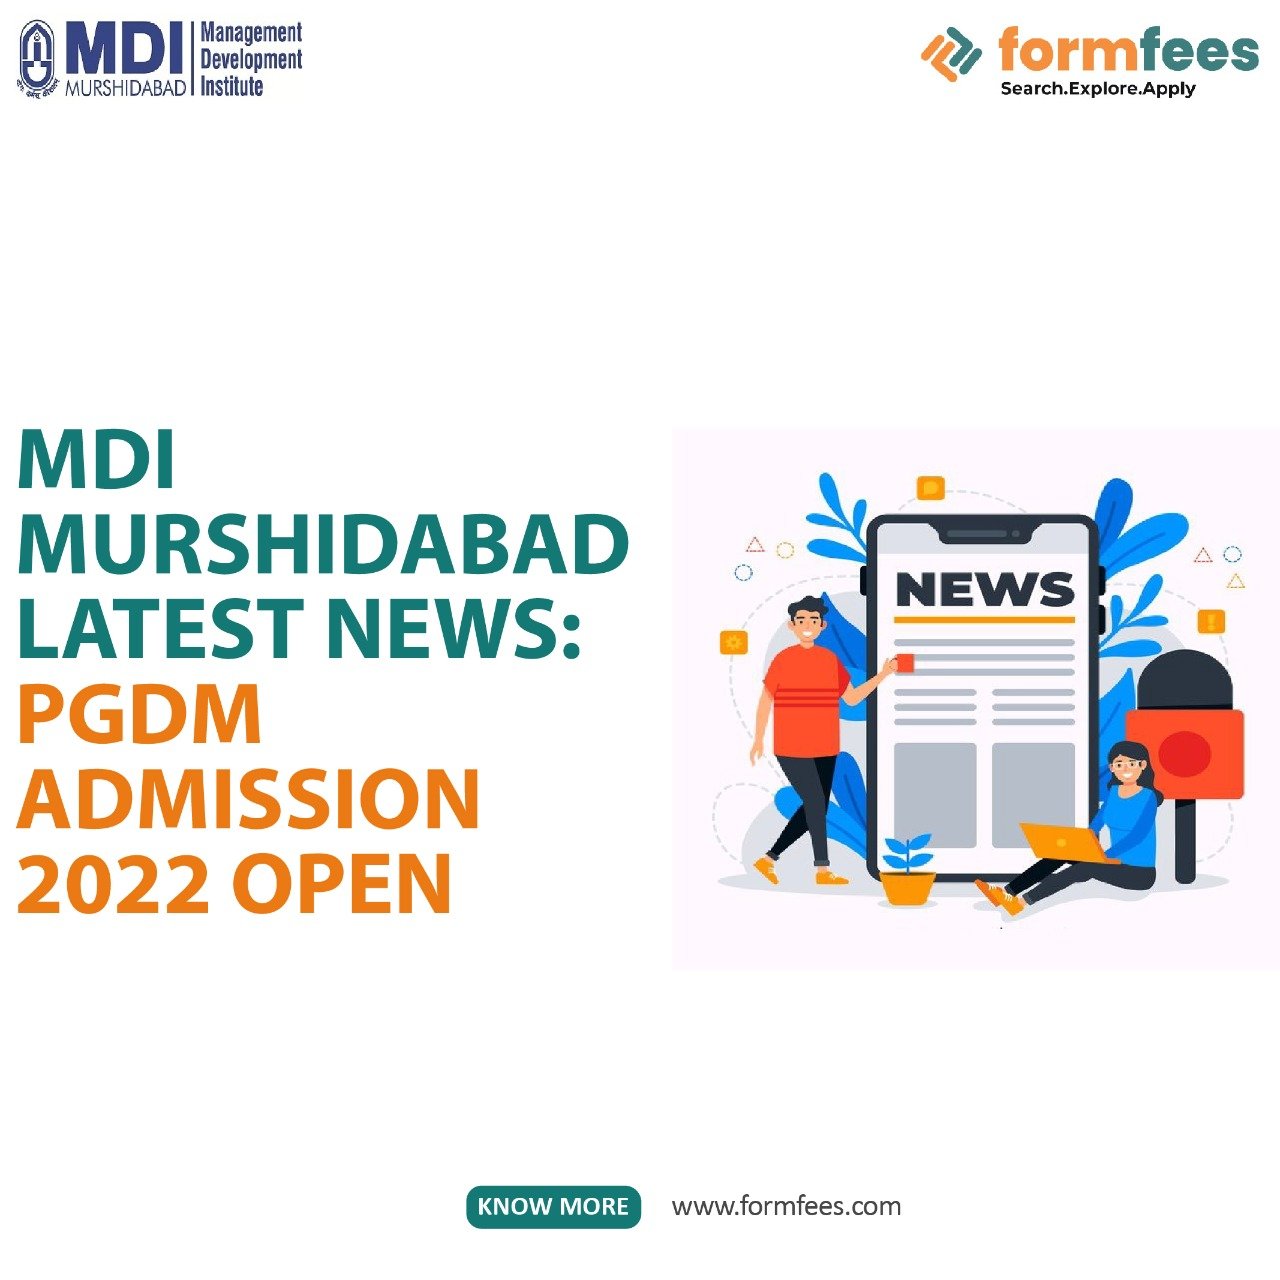 mdi-gurgaon-latest-news-mba-admission-application-form-2022-formfees